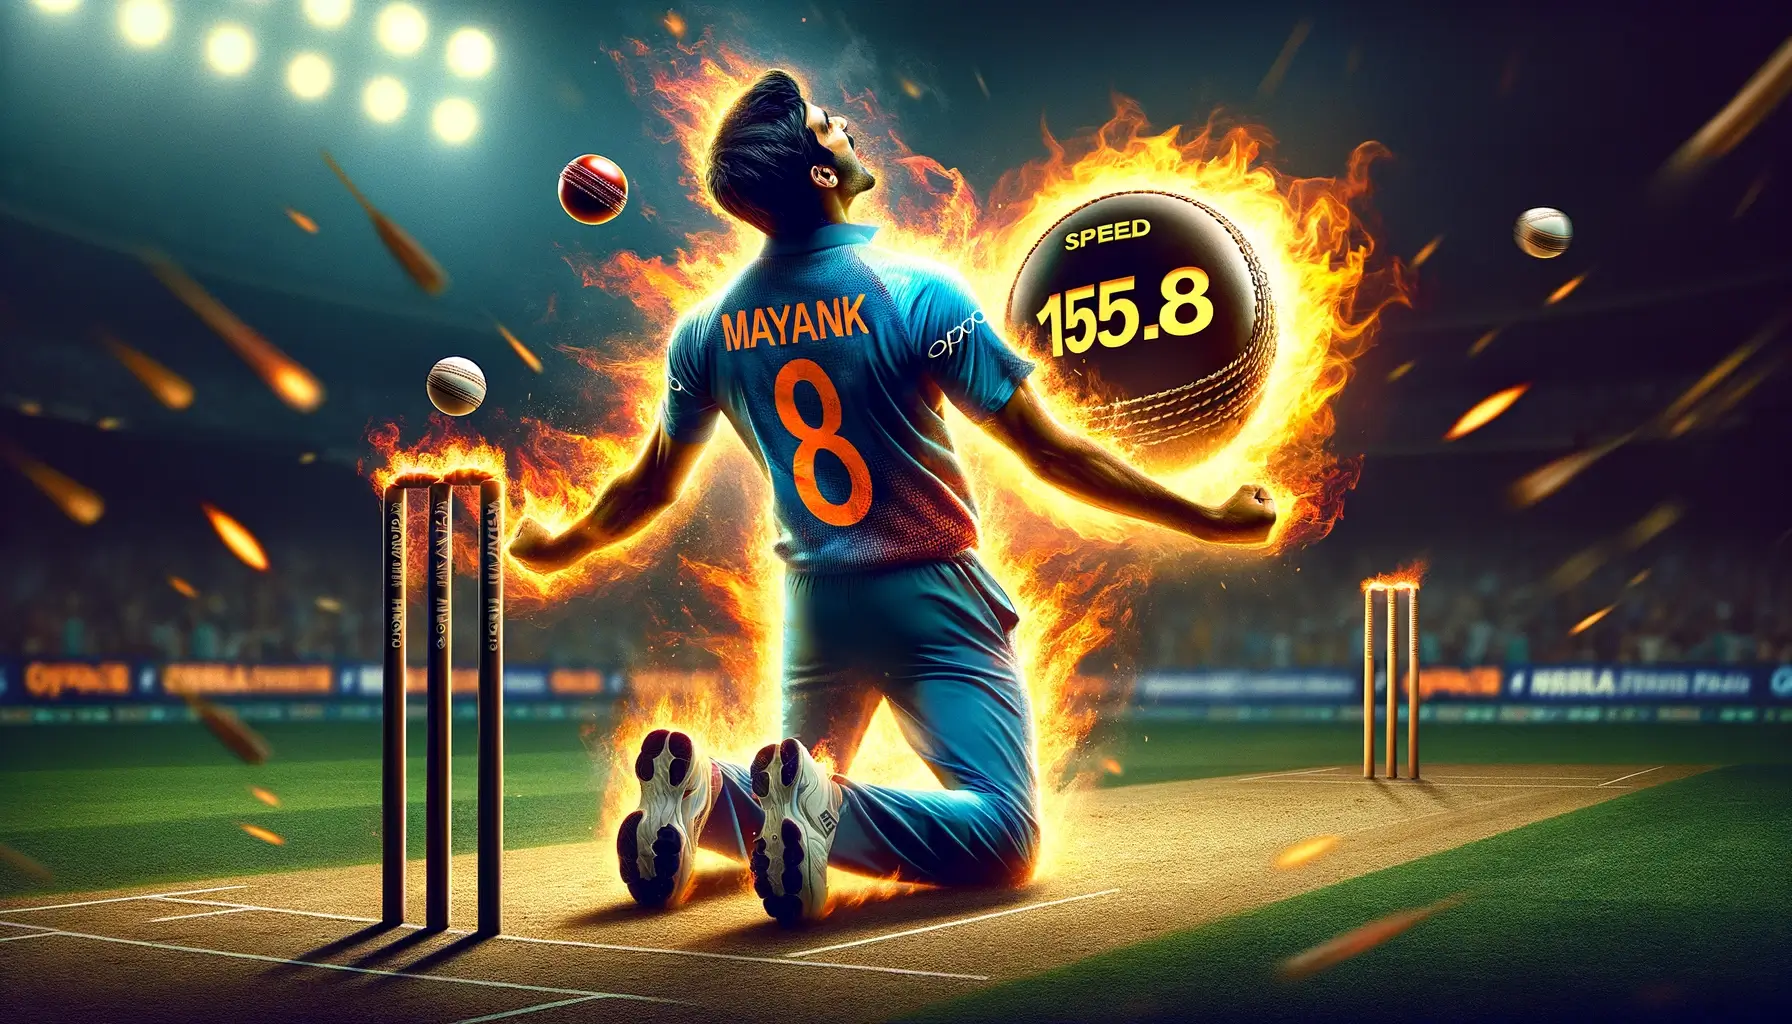 Mayank yadav fastest ball at 155.8 km